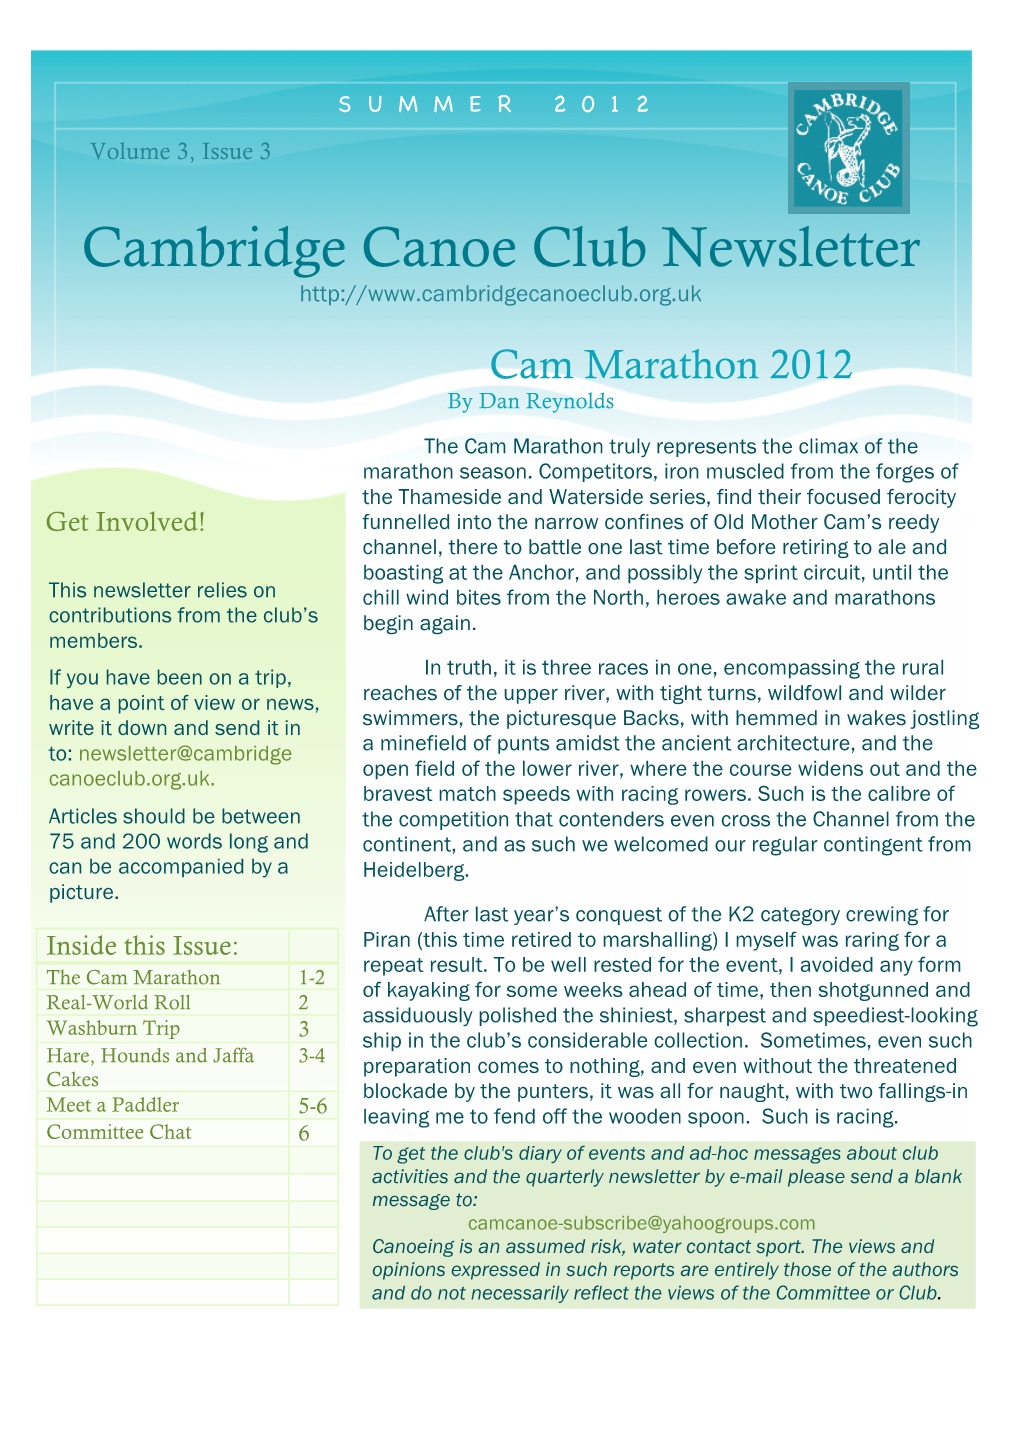 Cambridge Canoe Club Newsletter Cam Marathon 2012 by Dan Reynolds